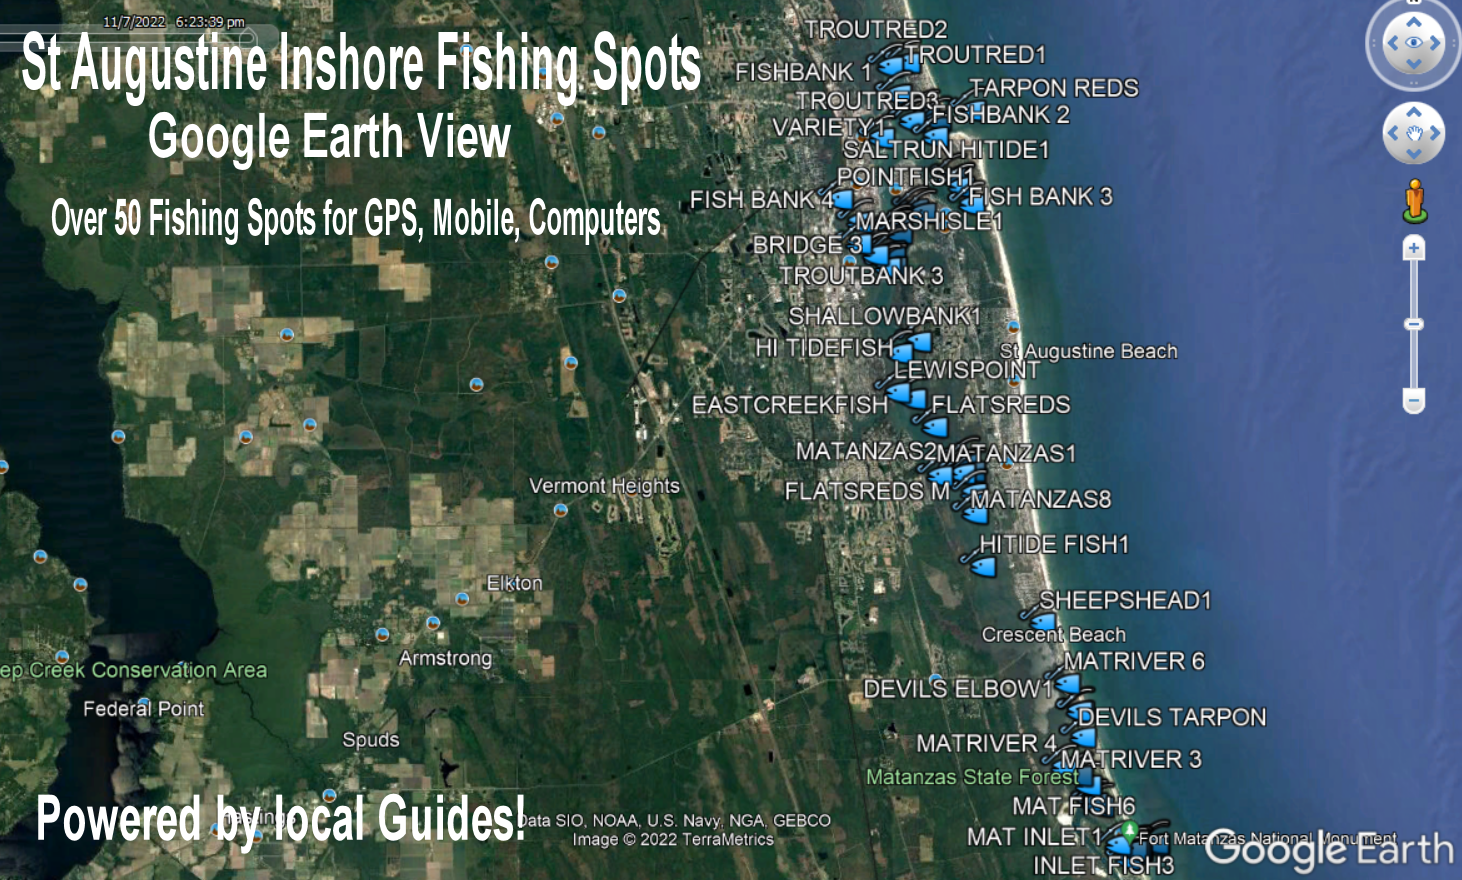 St Augustine Inshore GPS Fishing Maps - FL Fishing Spots